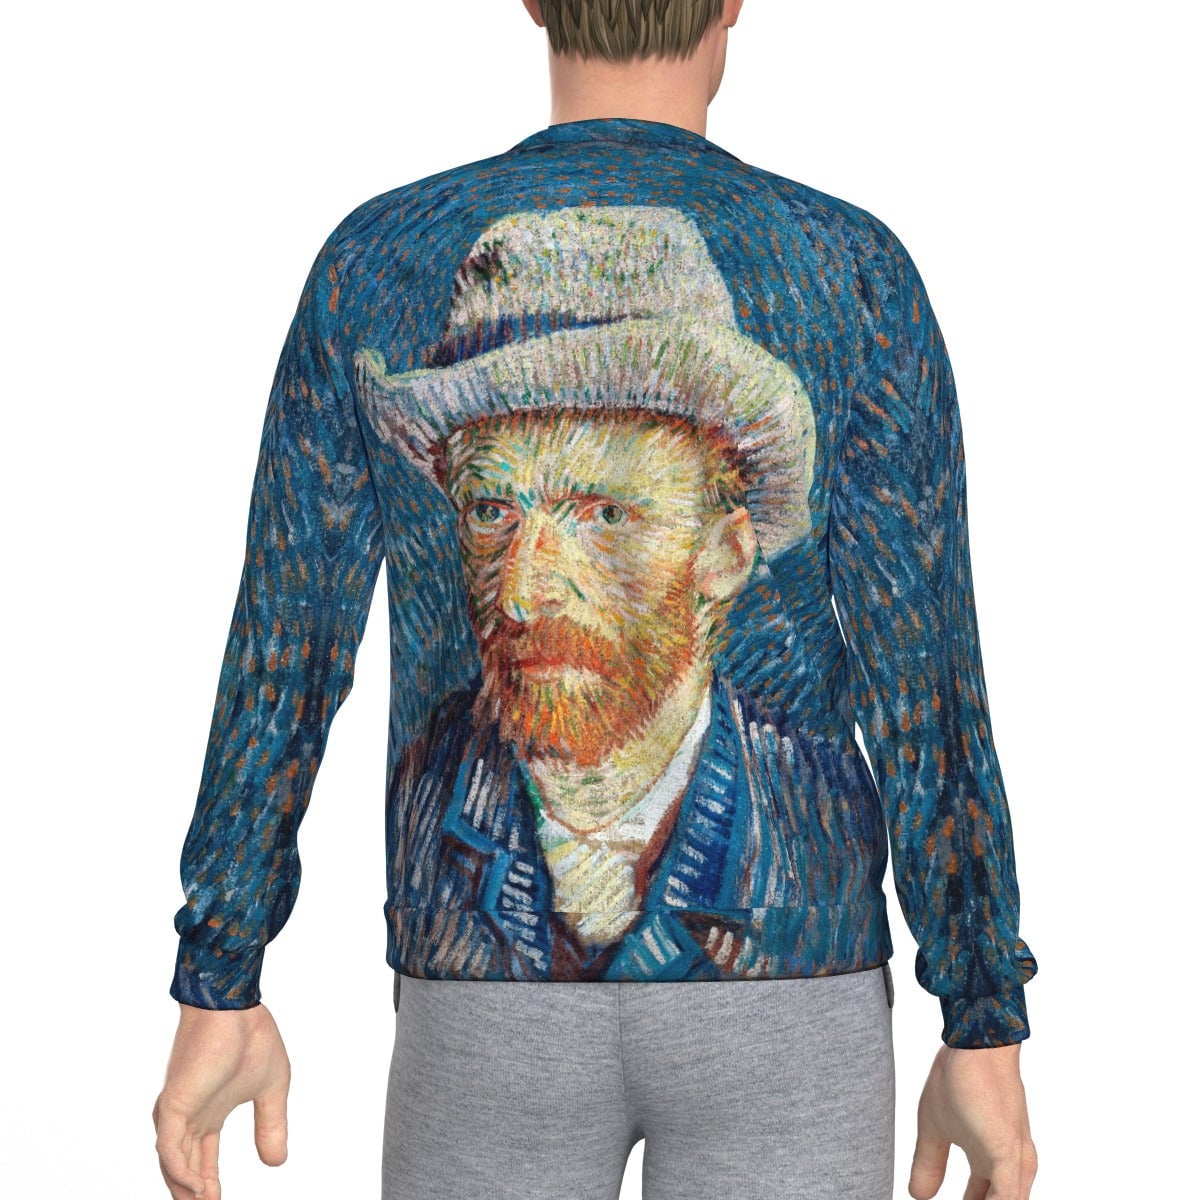 Self-Portrait with Grey Felt Hat Van Gogh Sweatshirt